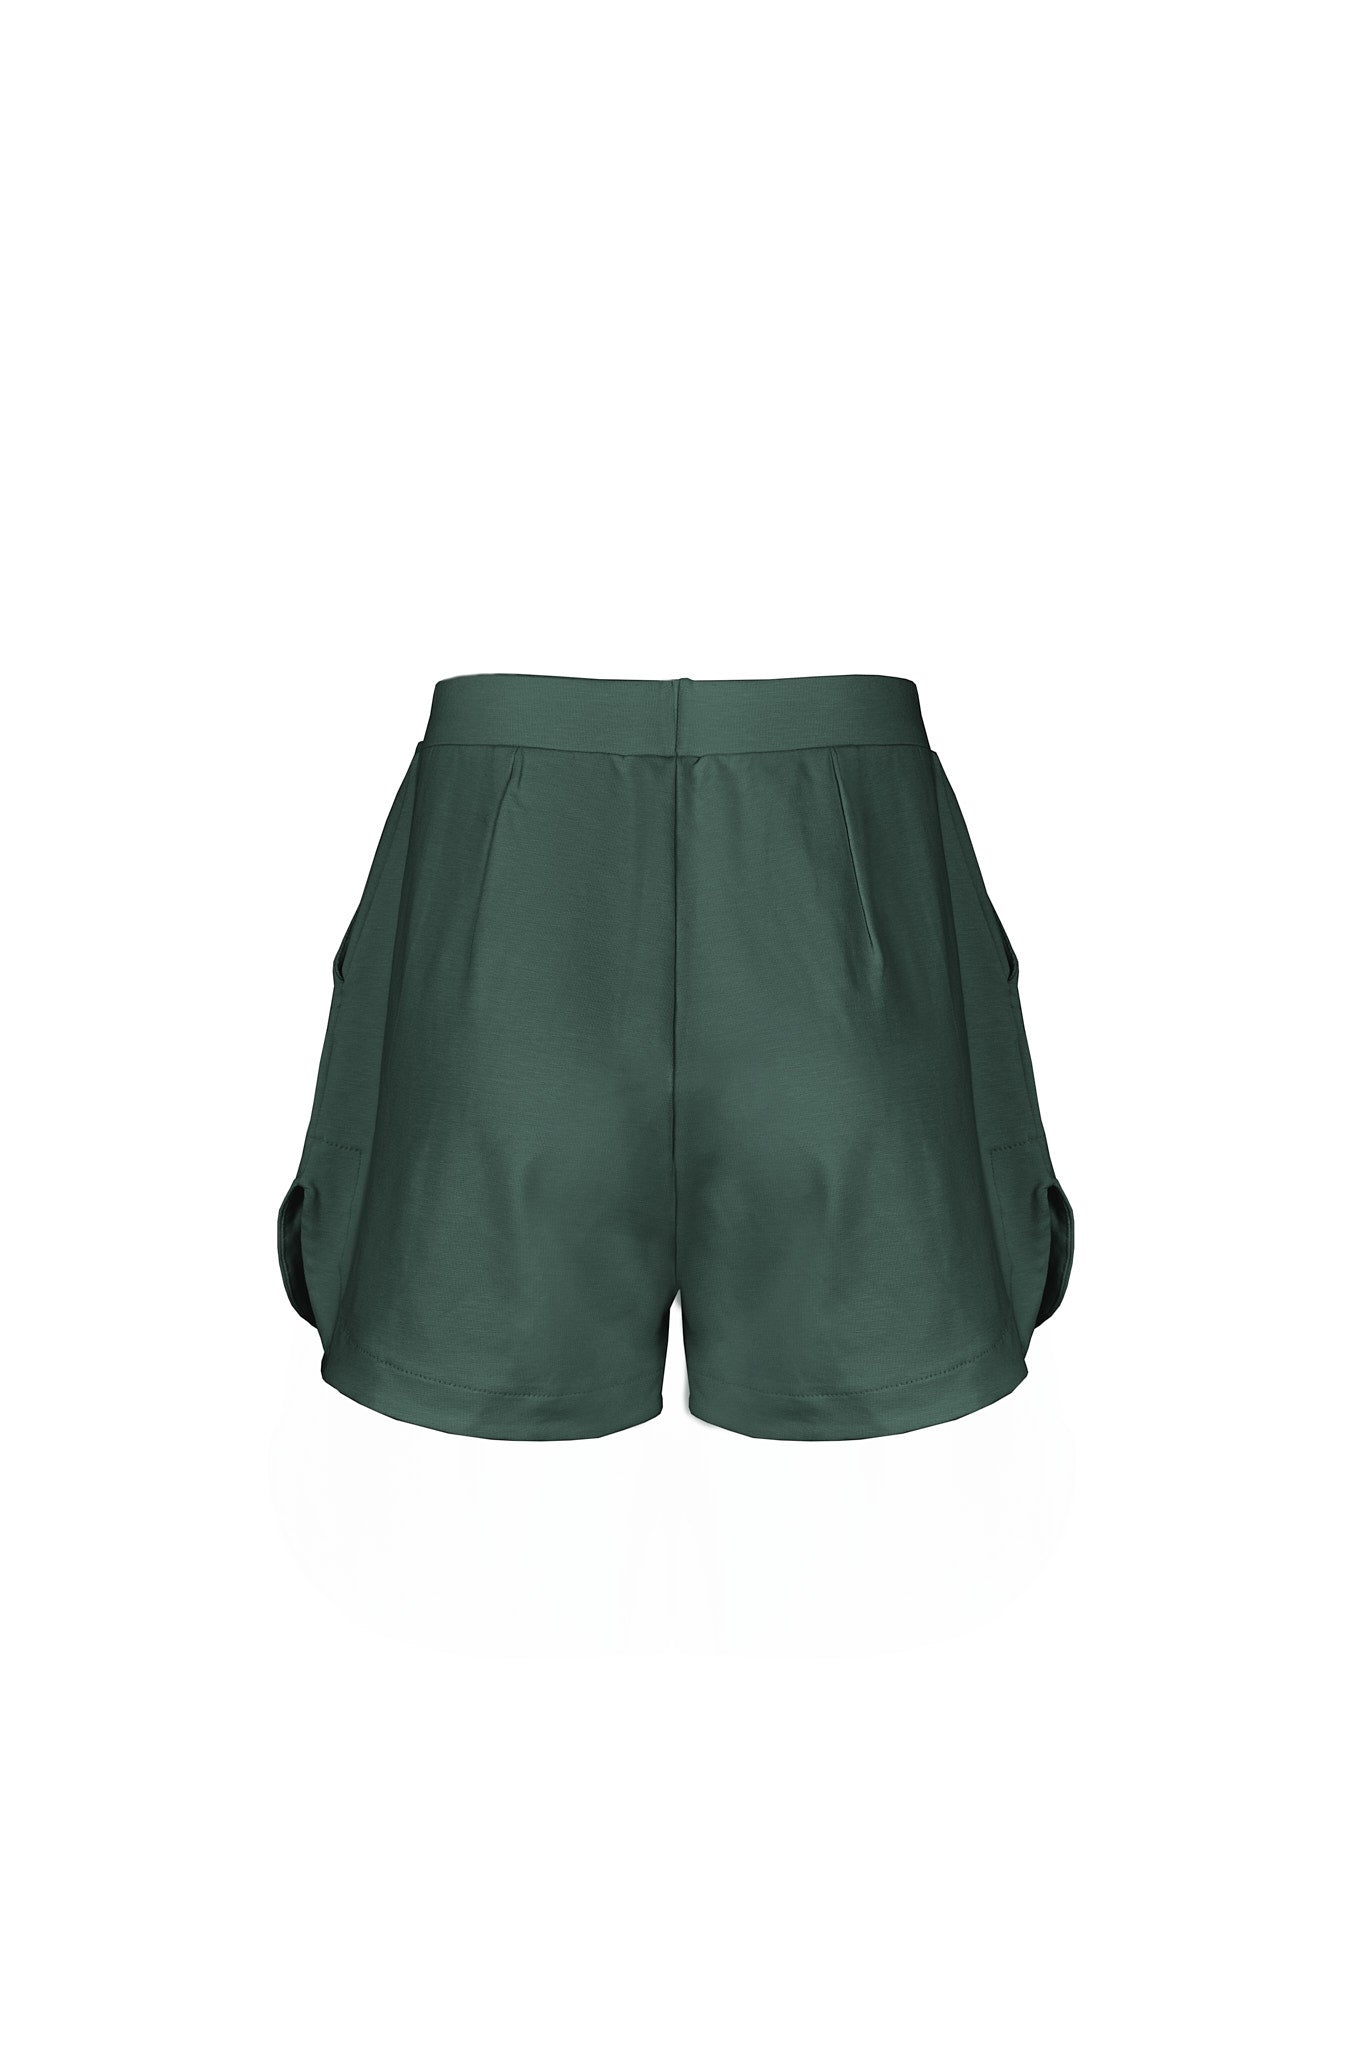 Green formal shorts made of lyocell by MOYA KALA 